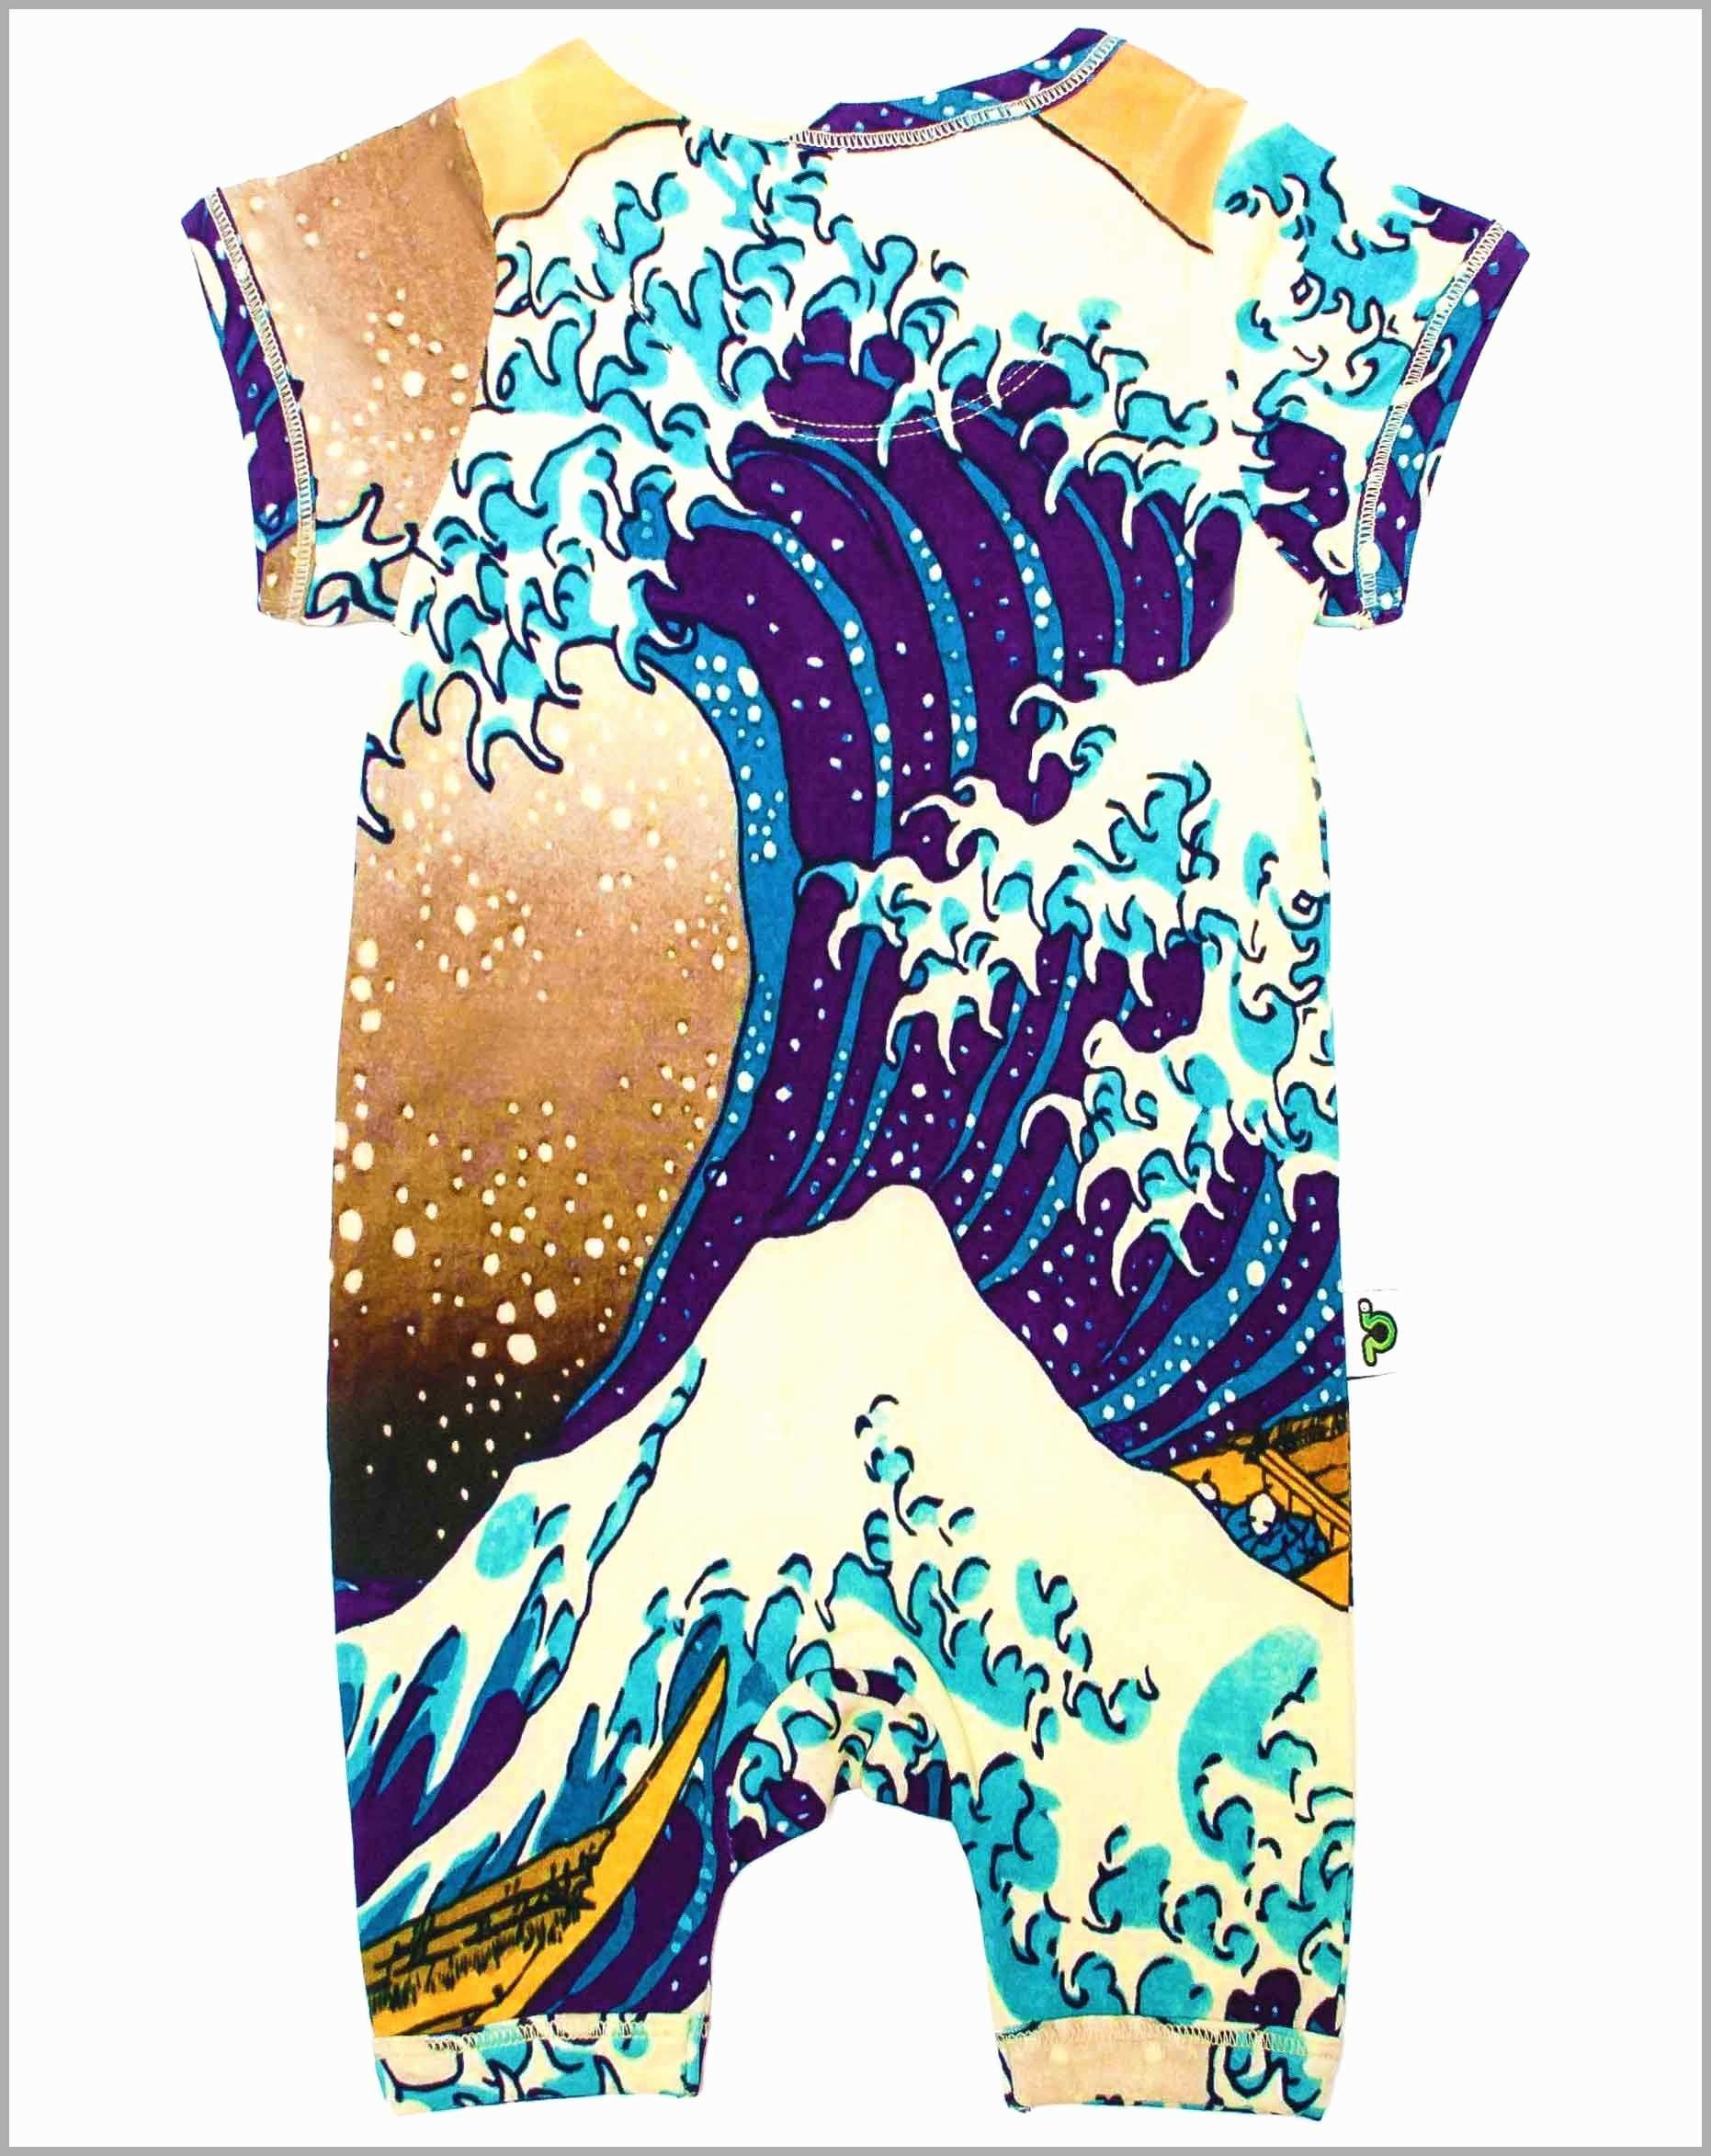 1862x2346 The Great Wave Off Kanagawa Wallpaper Marvelous Hokusai Great Wave Print 4k